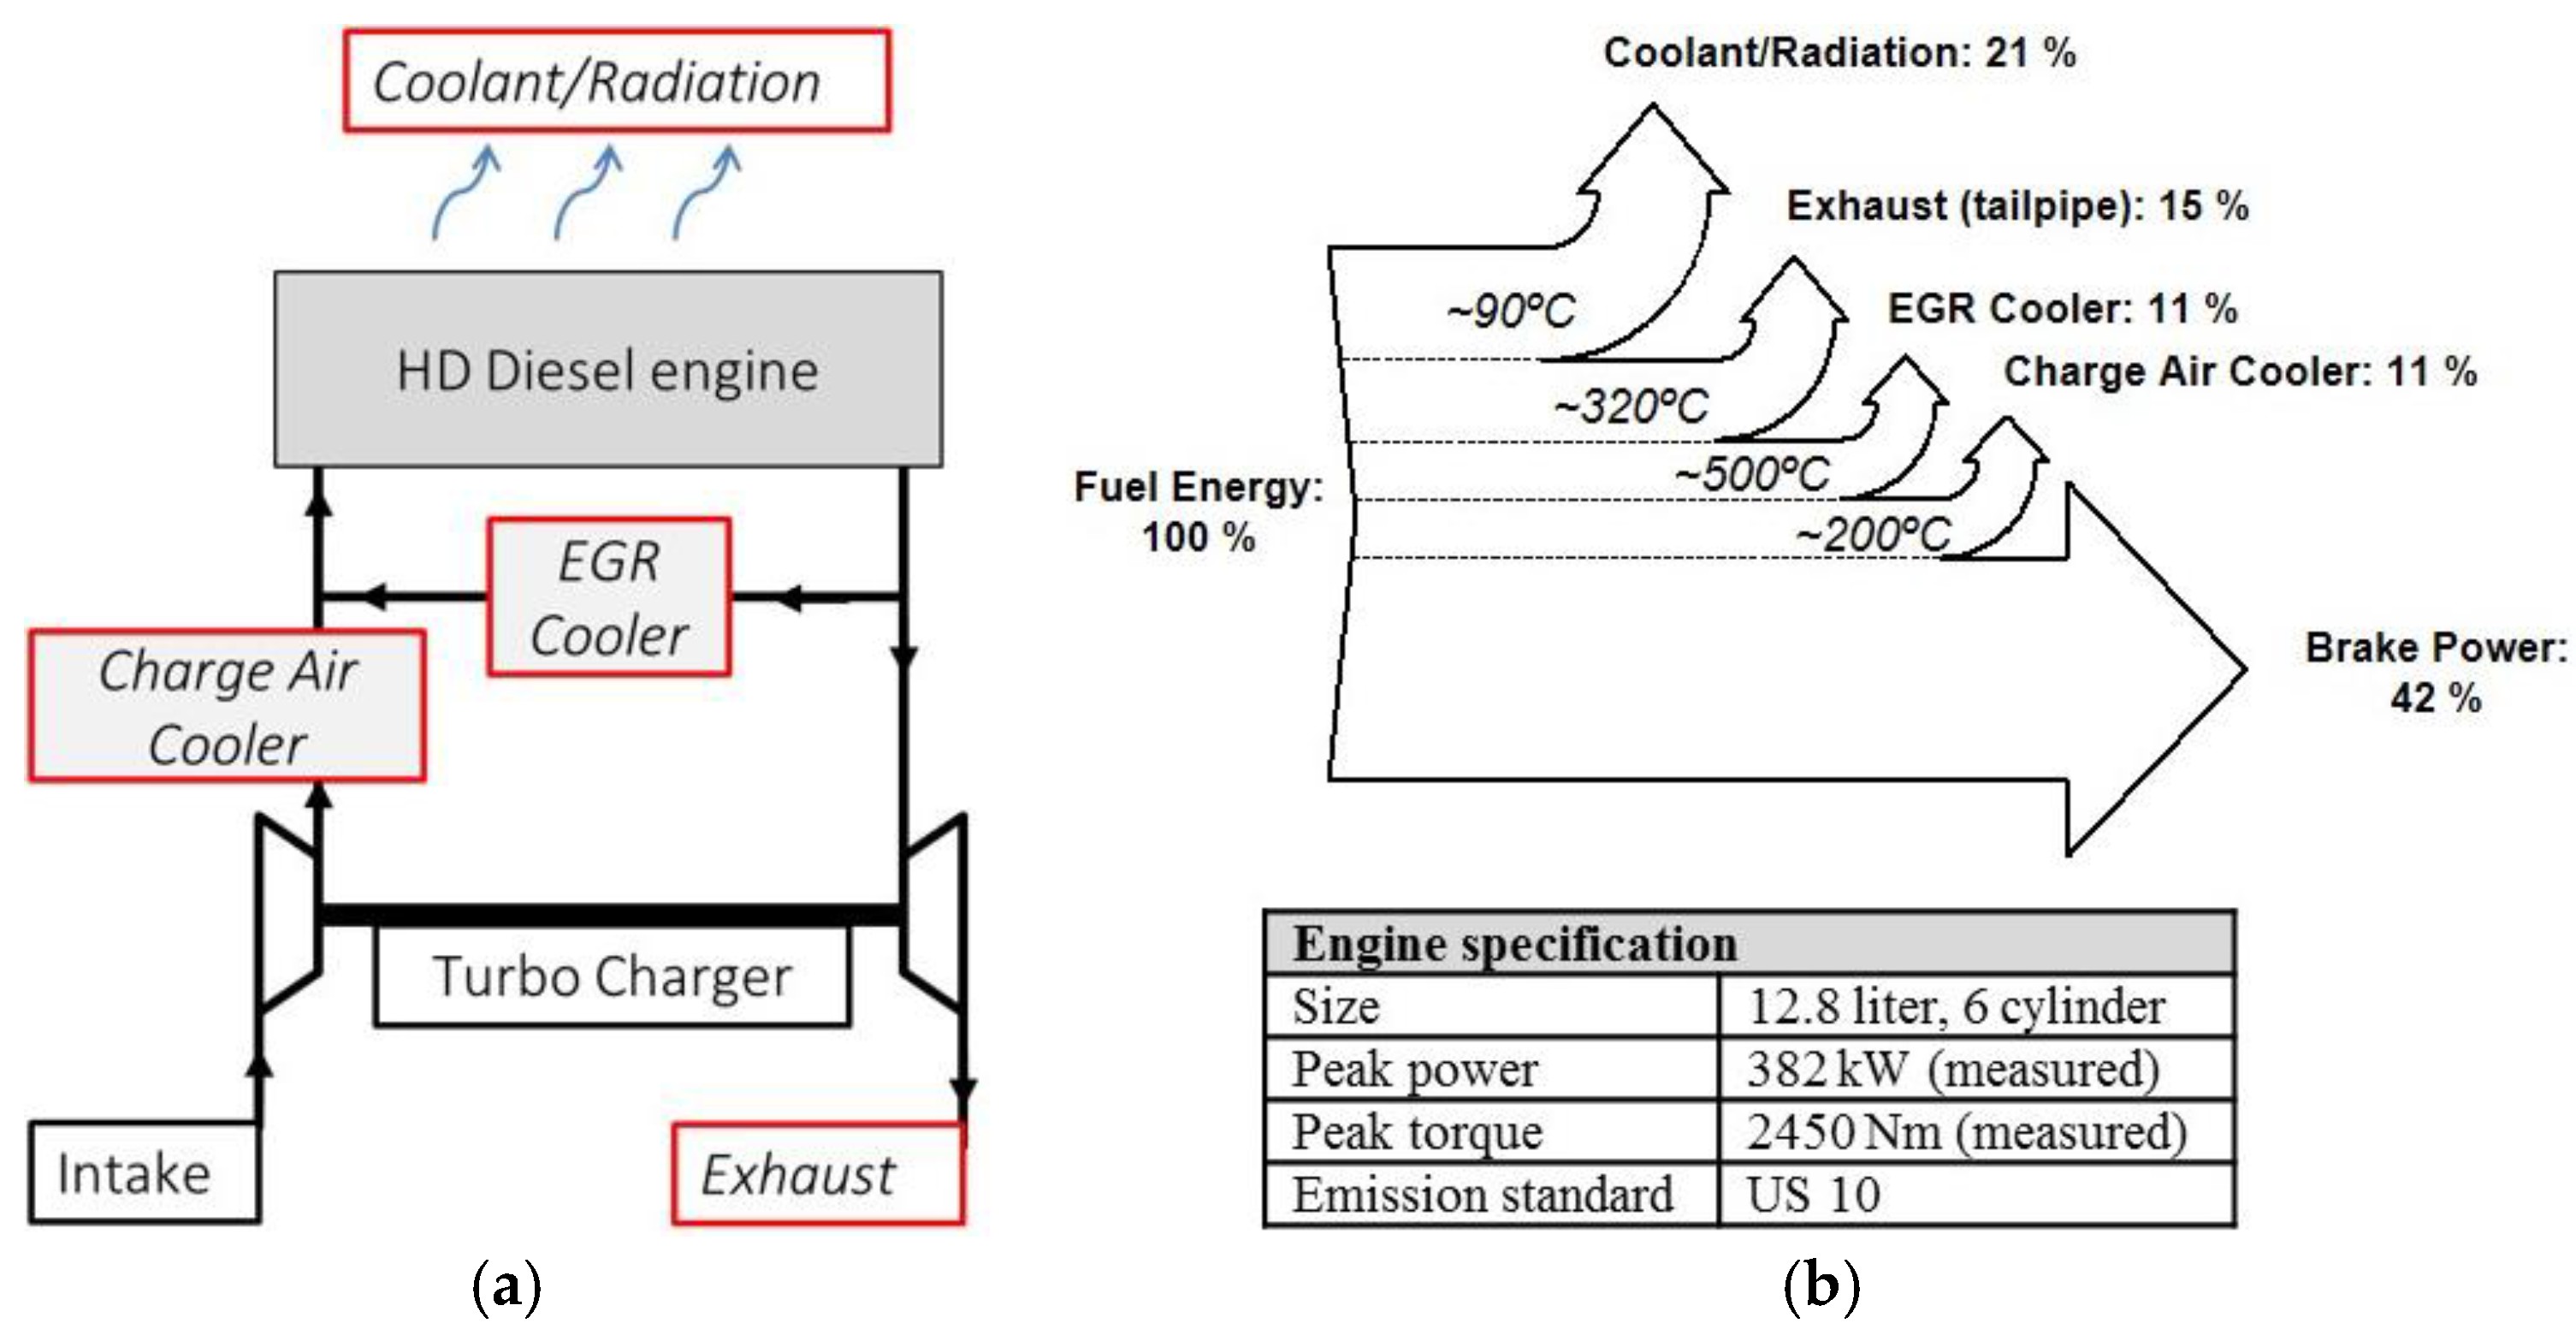 4 Stroke Internal Combustion Engine Diagram Energies Free Full Text Of 4 Stroke Internal Combustion Engine Diagram